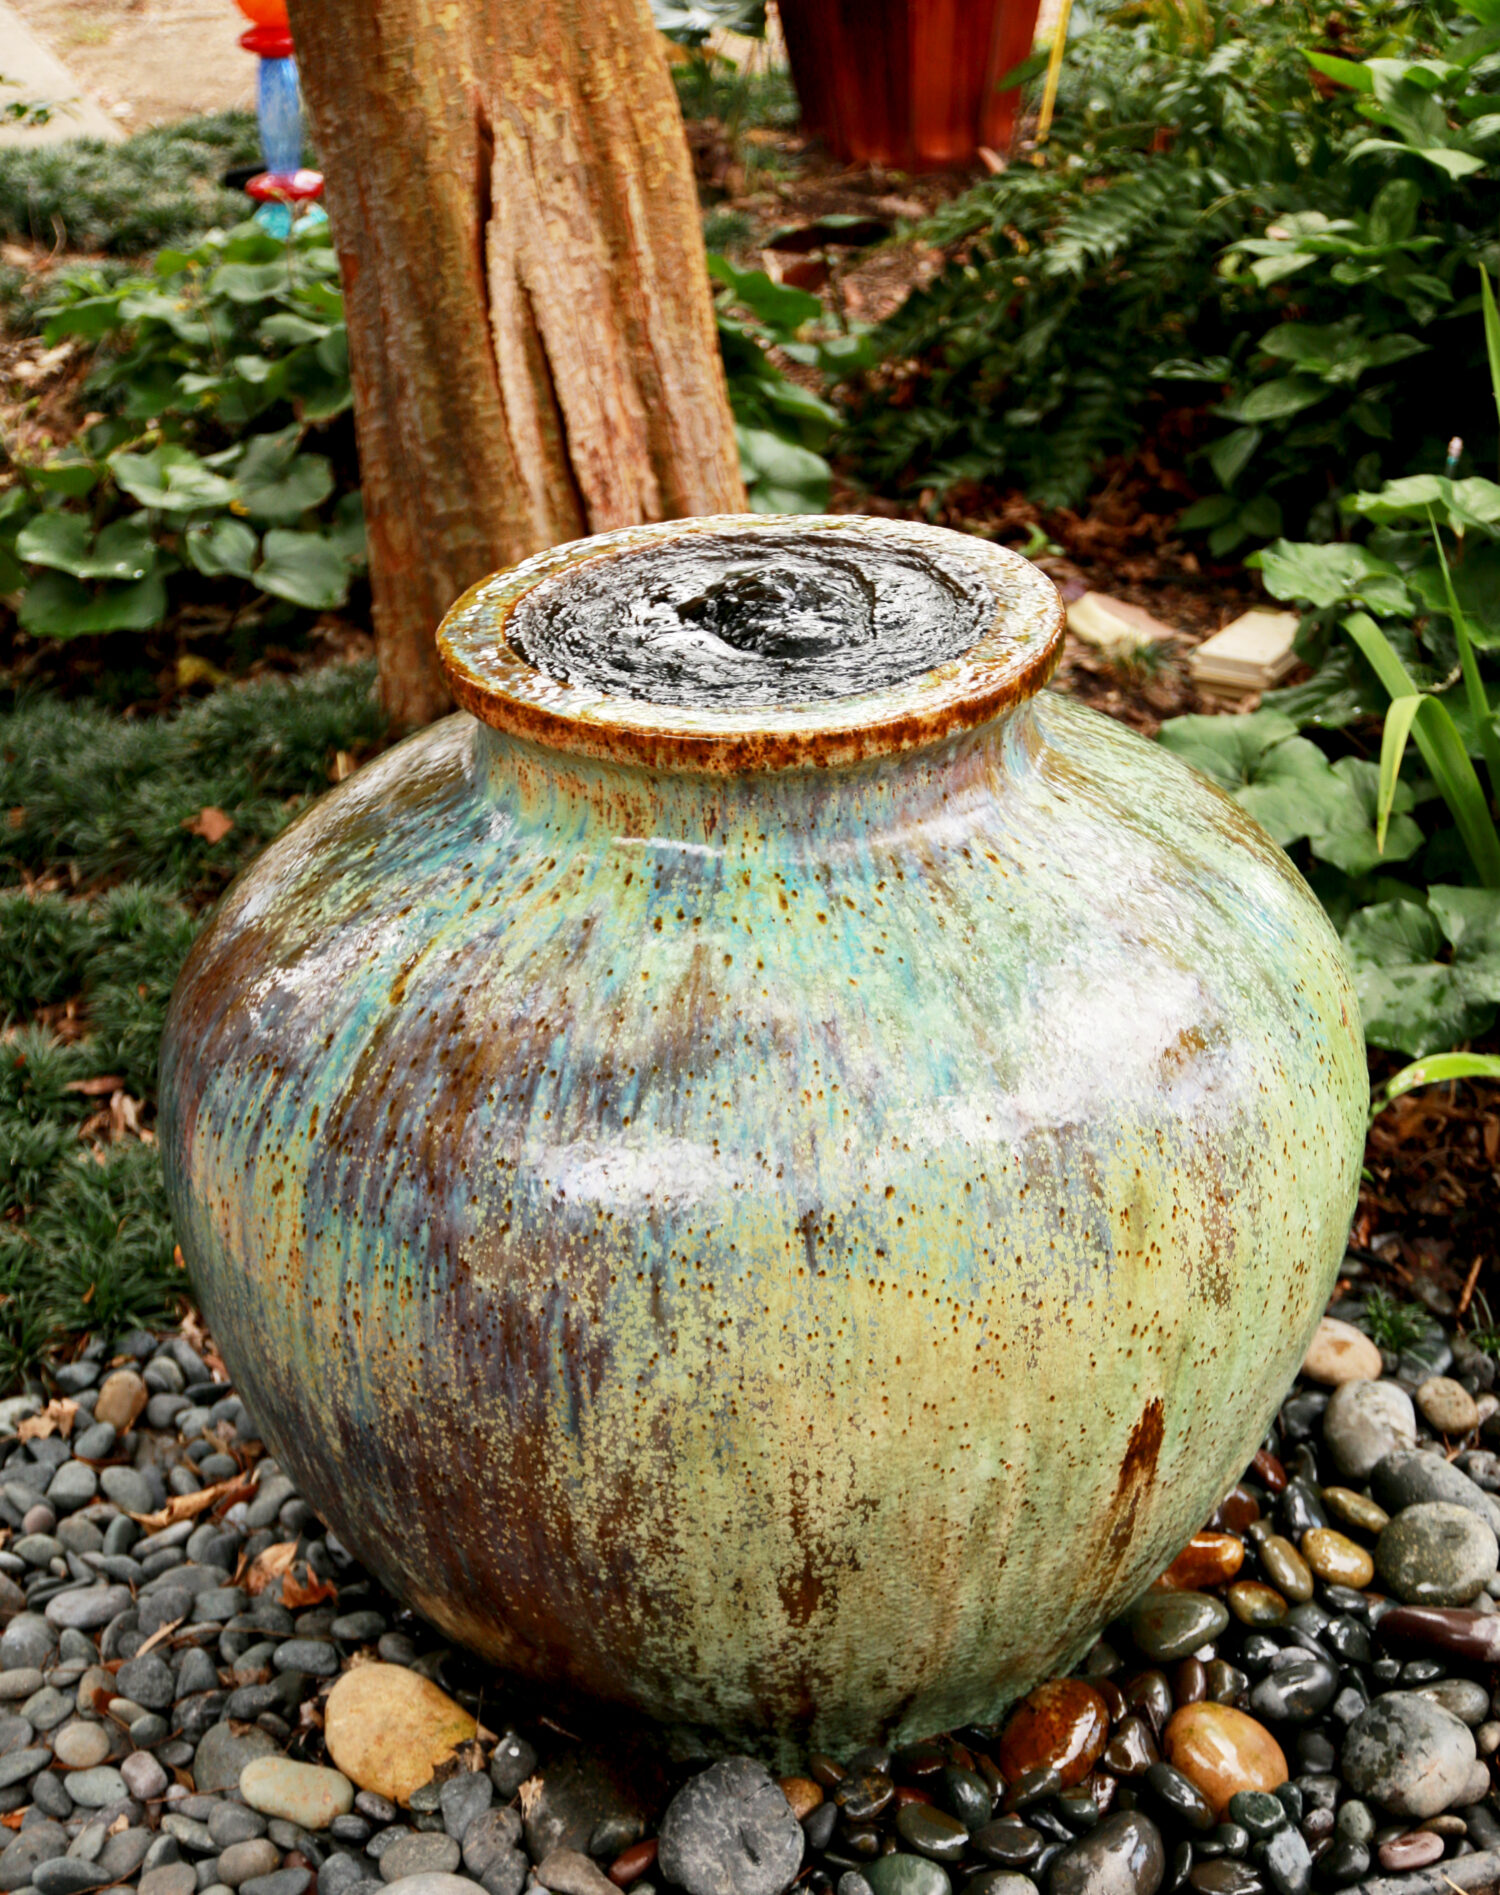 Anamese Garden + Home’s top-performing glaze is Malachite, said Ashley Goldman. Photo courtesy of Anamese Garden + Home.